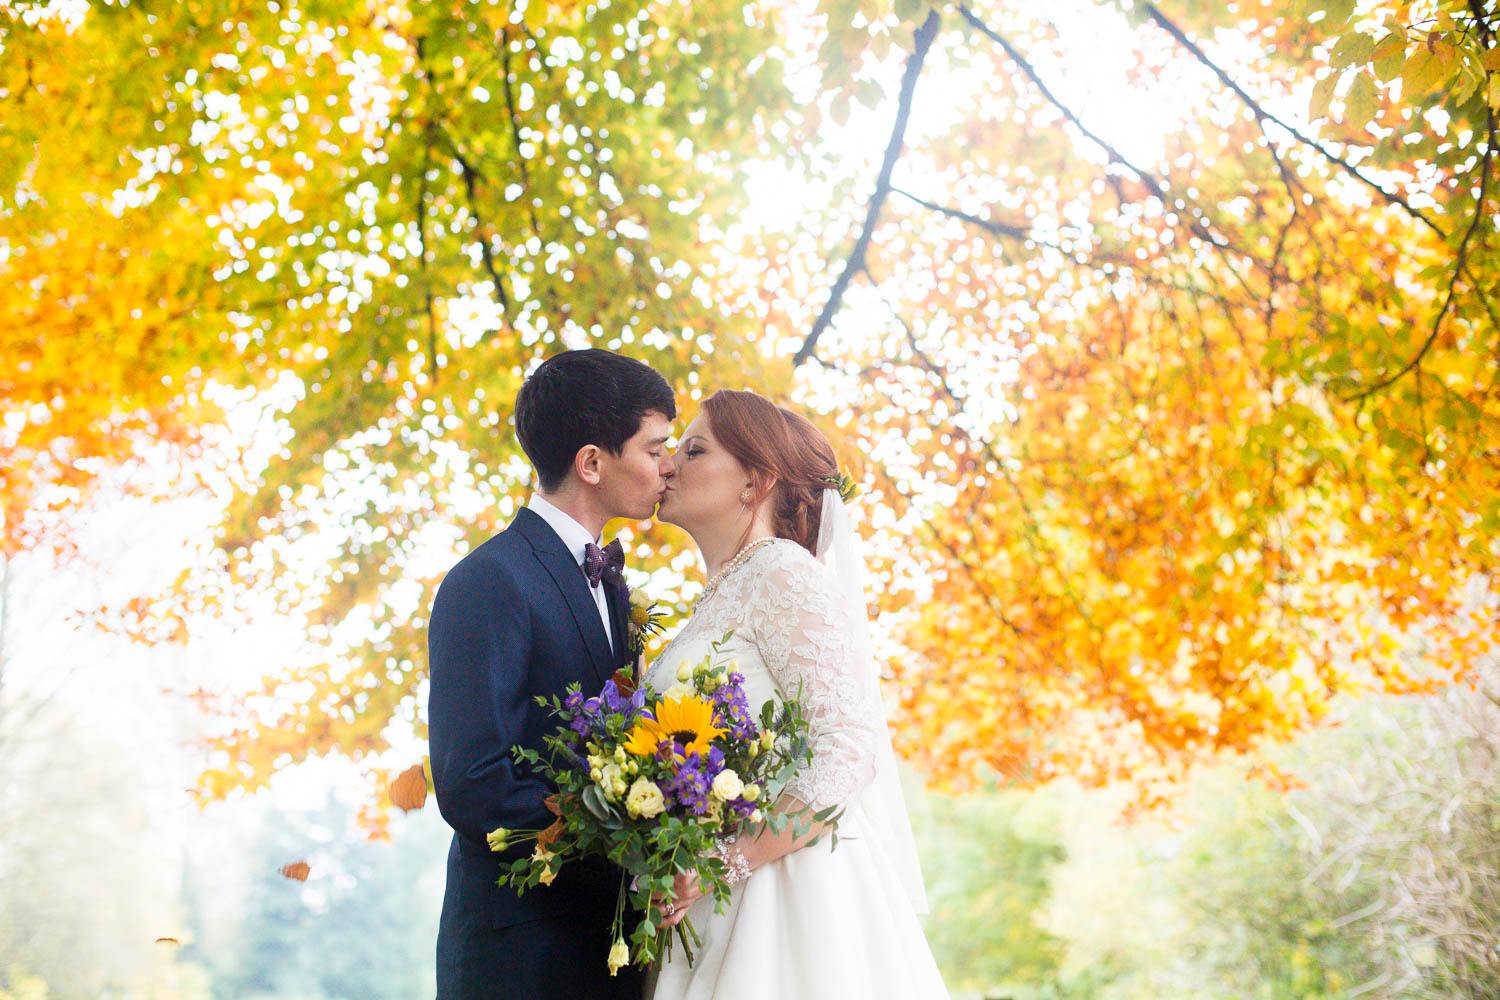 MorLove Wedding Photographer Charlene Morton Local Kiss Autumn Leaves Caldicot Castle